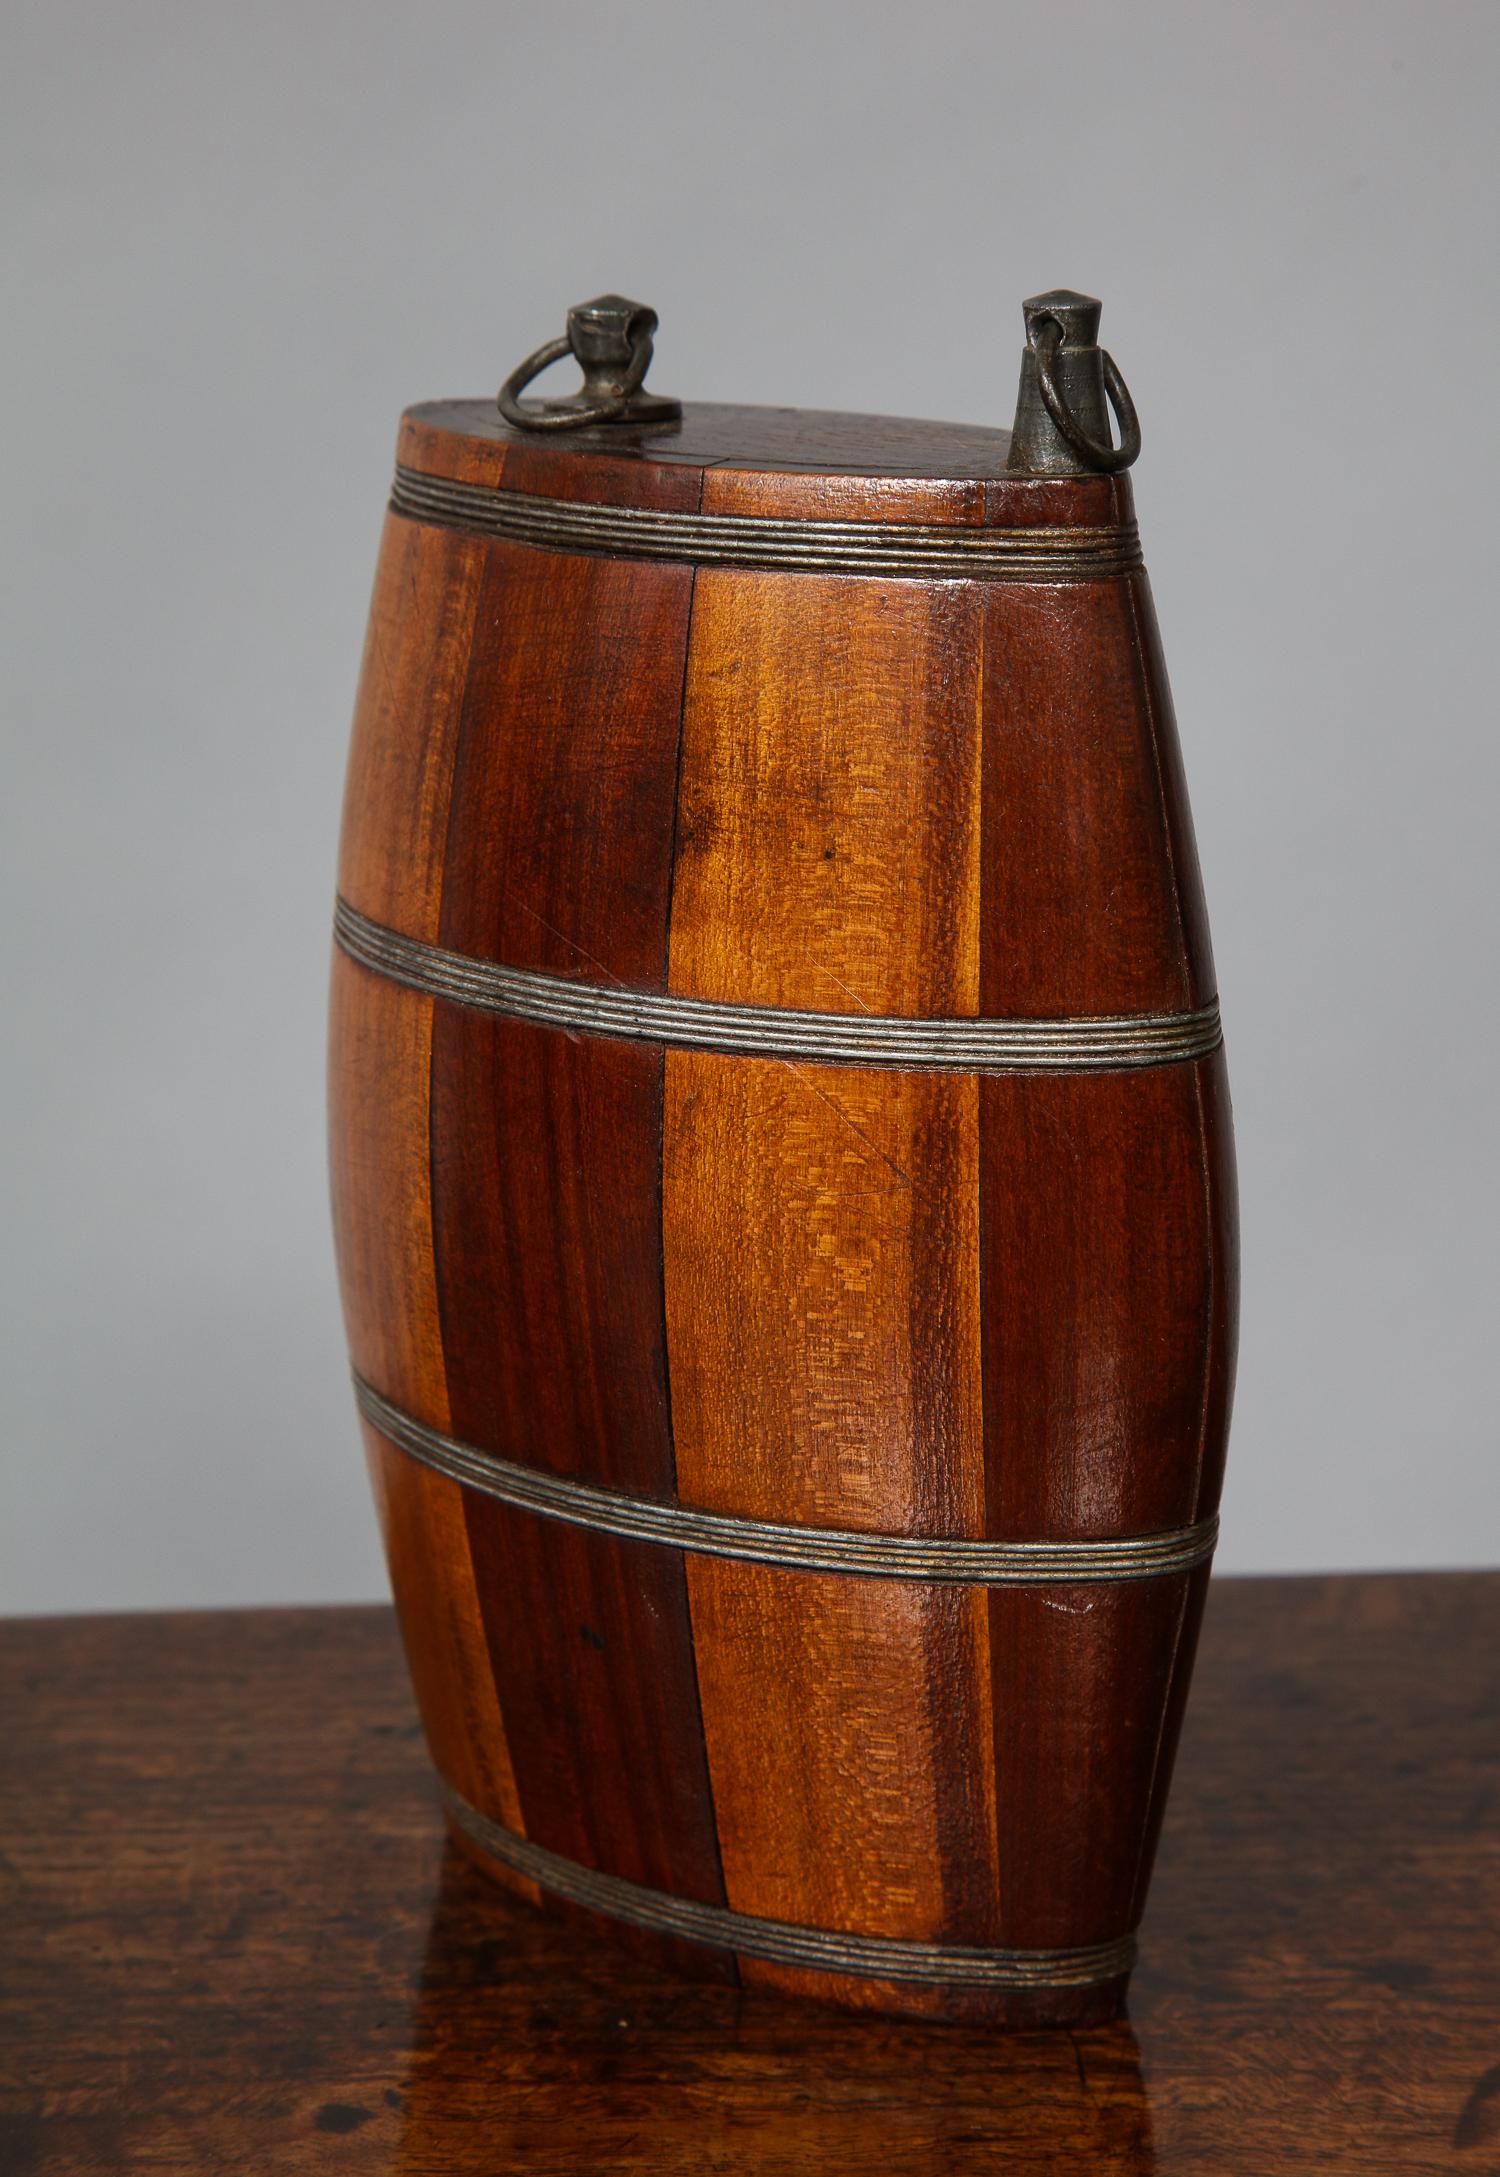 An unusual mid-19th century iron bound mixed mahogany and birch barrel from spirit flask, Scottish, circa 1860.

Treen